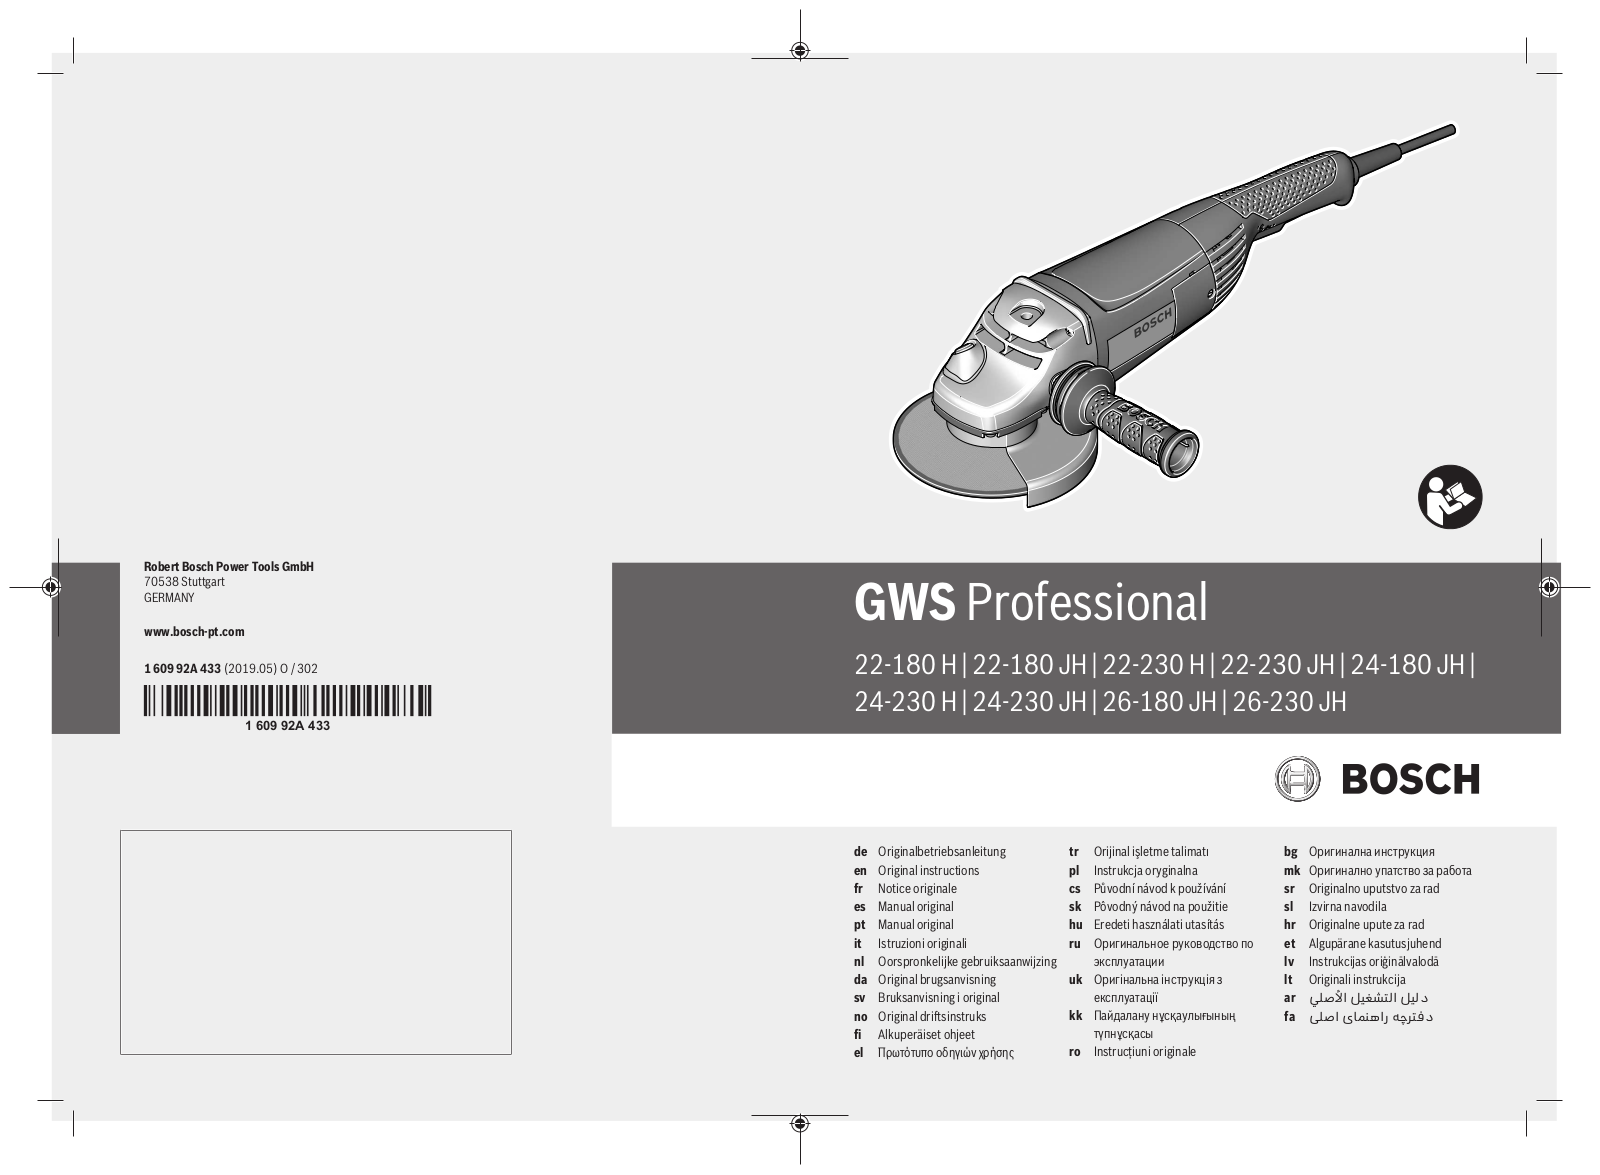 Bosch GWS 22-230 JH User Manual